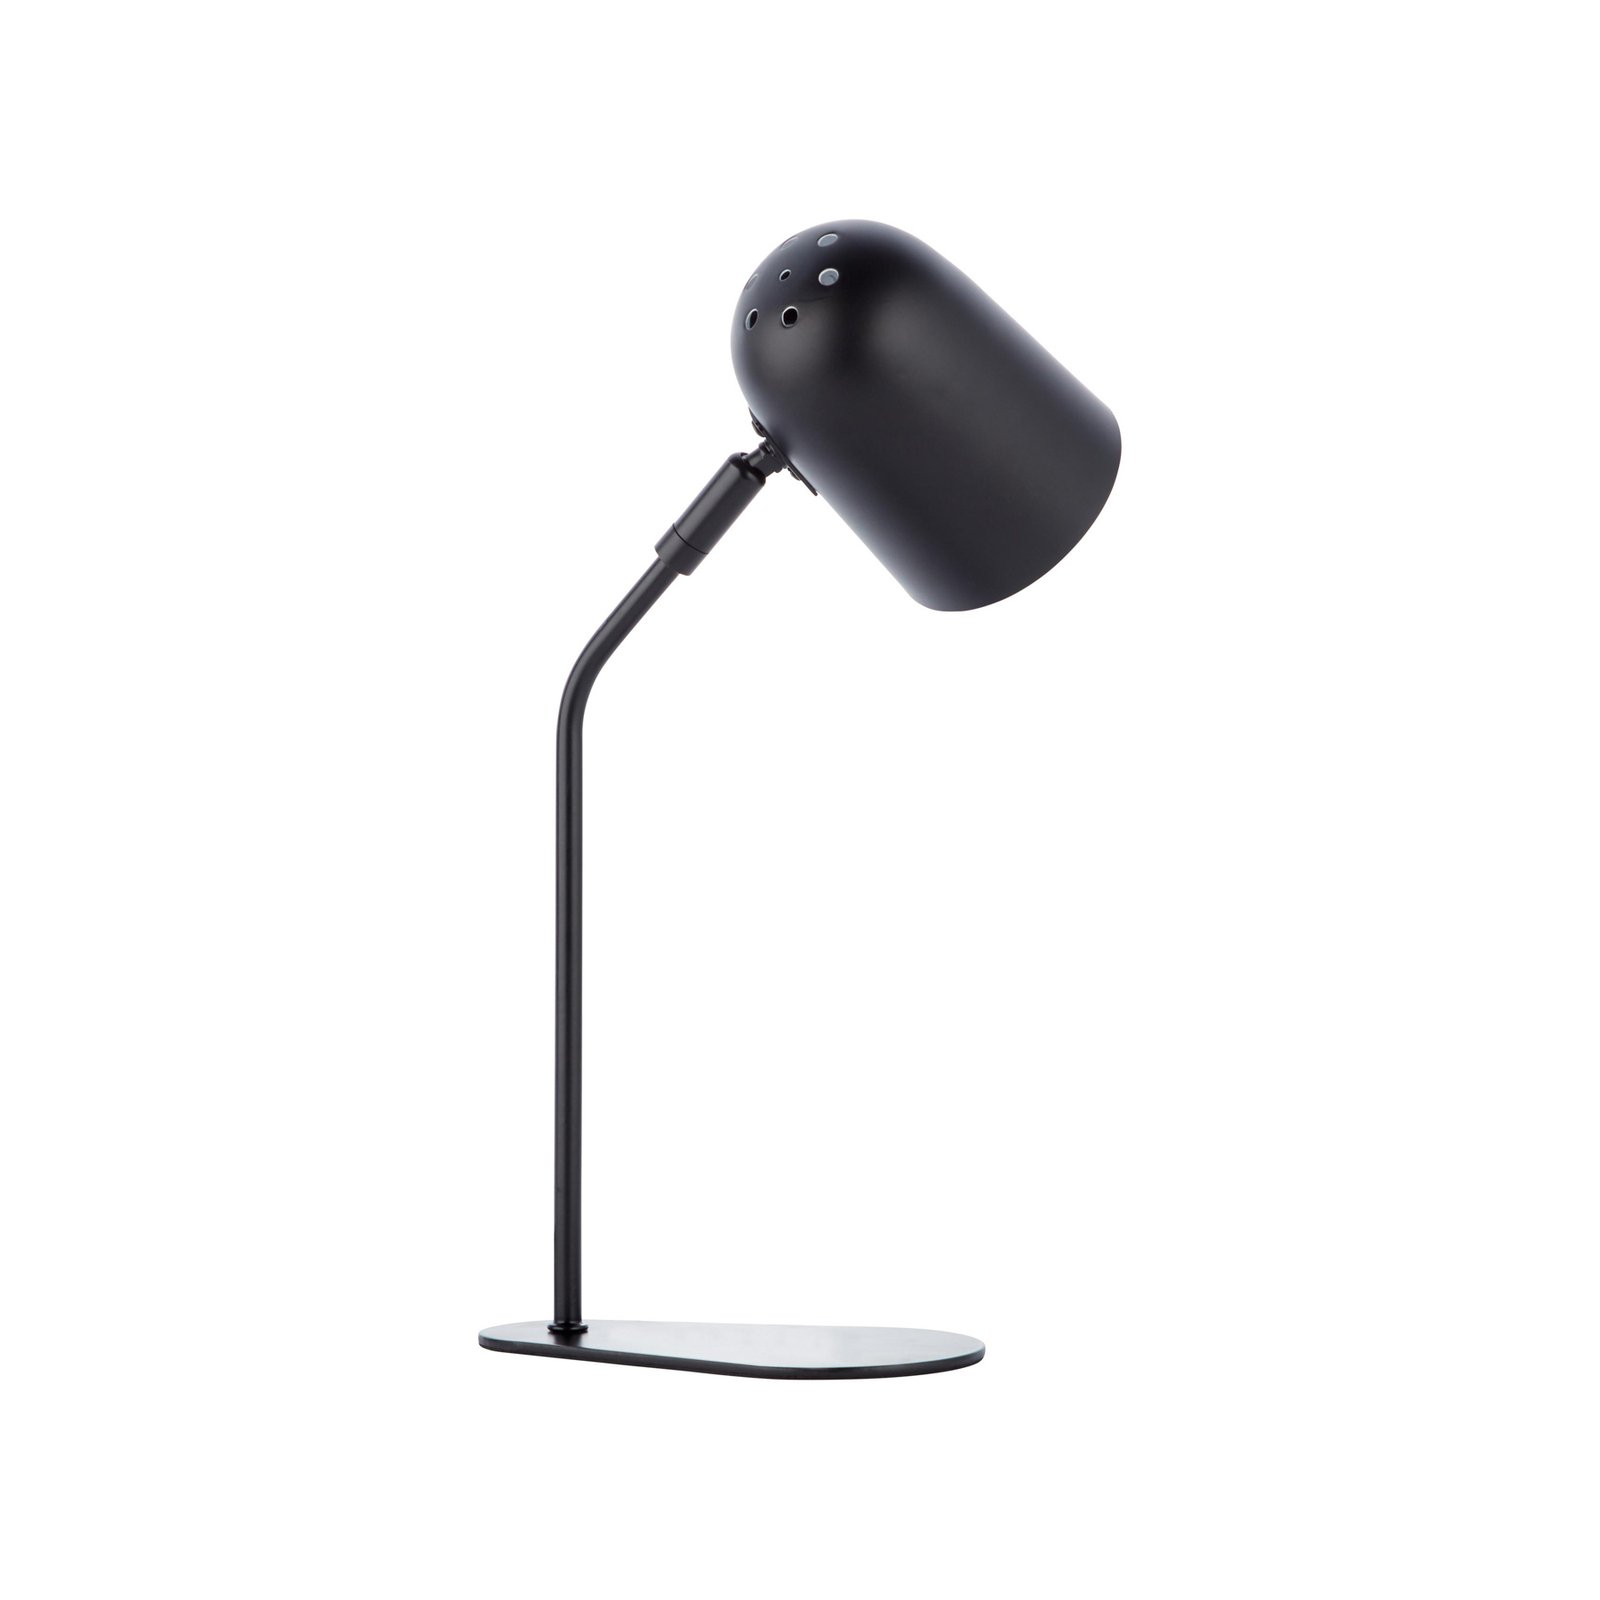 Tong tafellamp, zwart, hoogte 38 cm, metaal